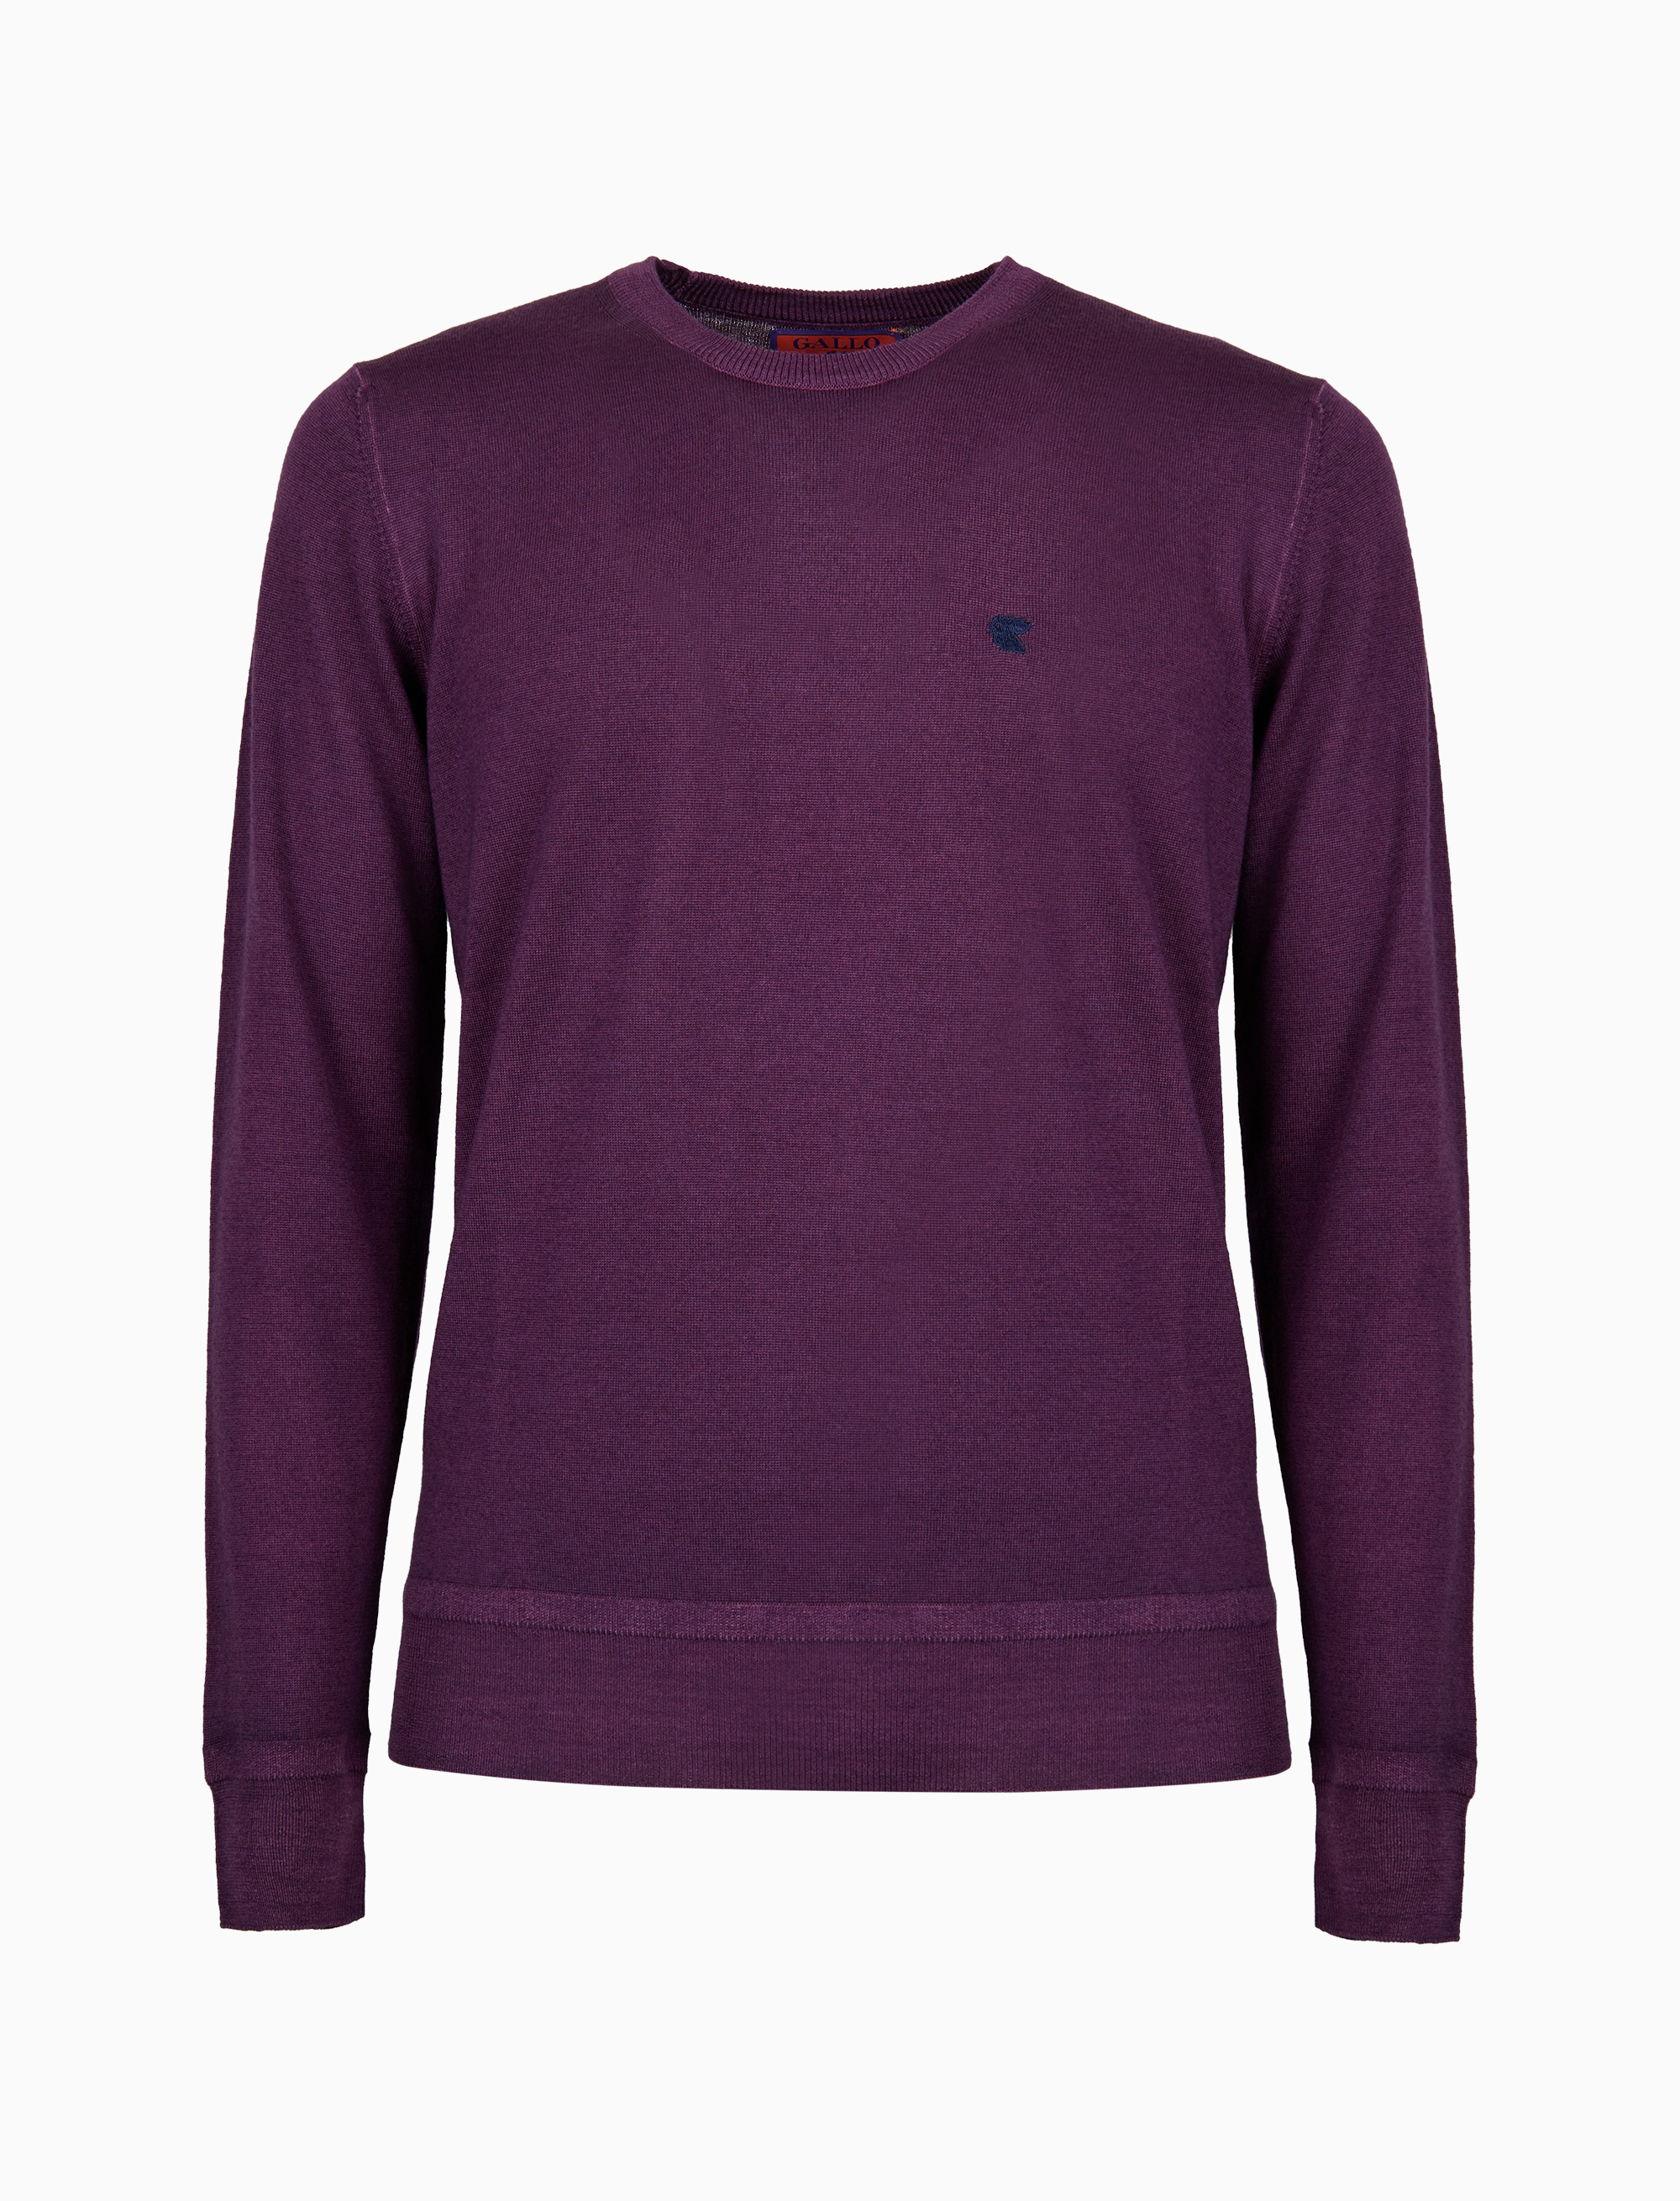 Men's plain purple wool crew-neck sweater | Gallo